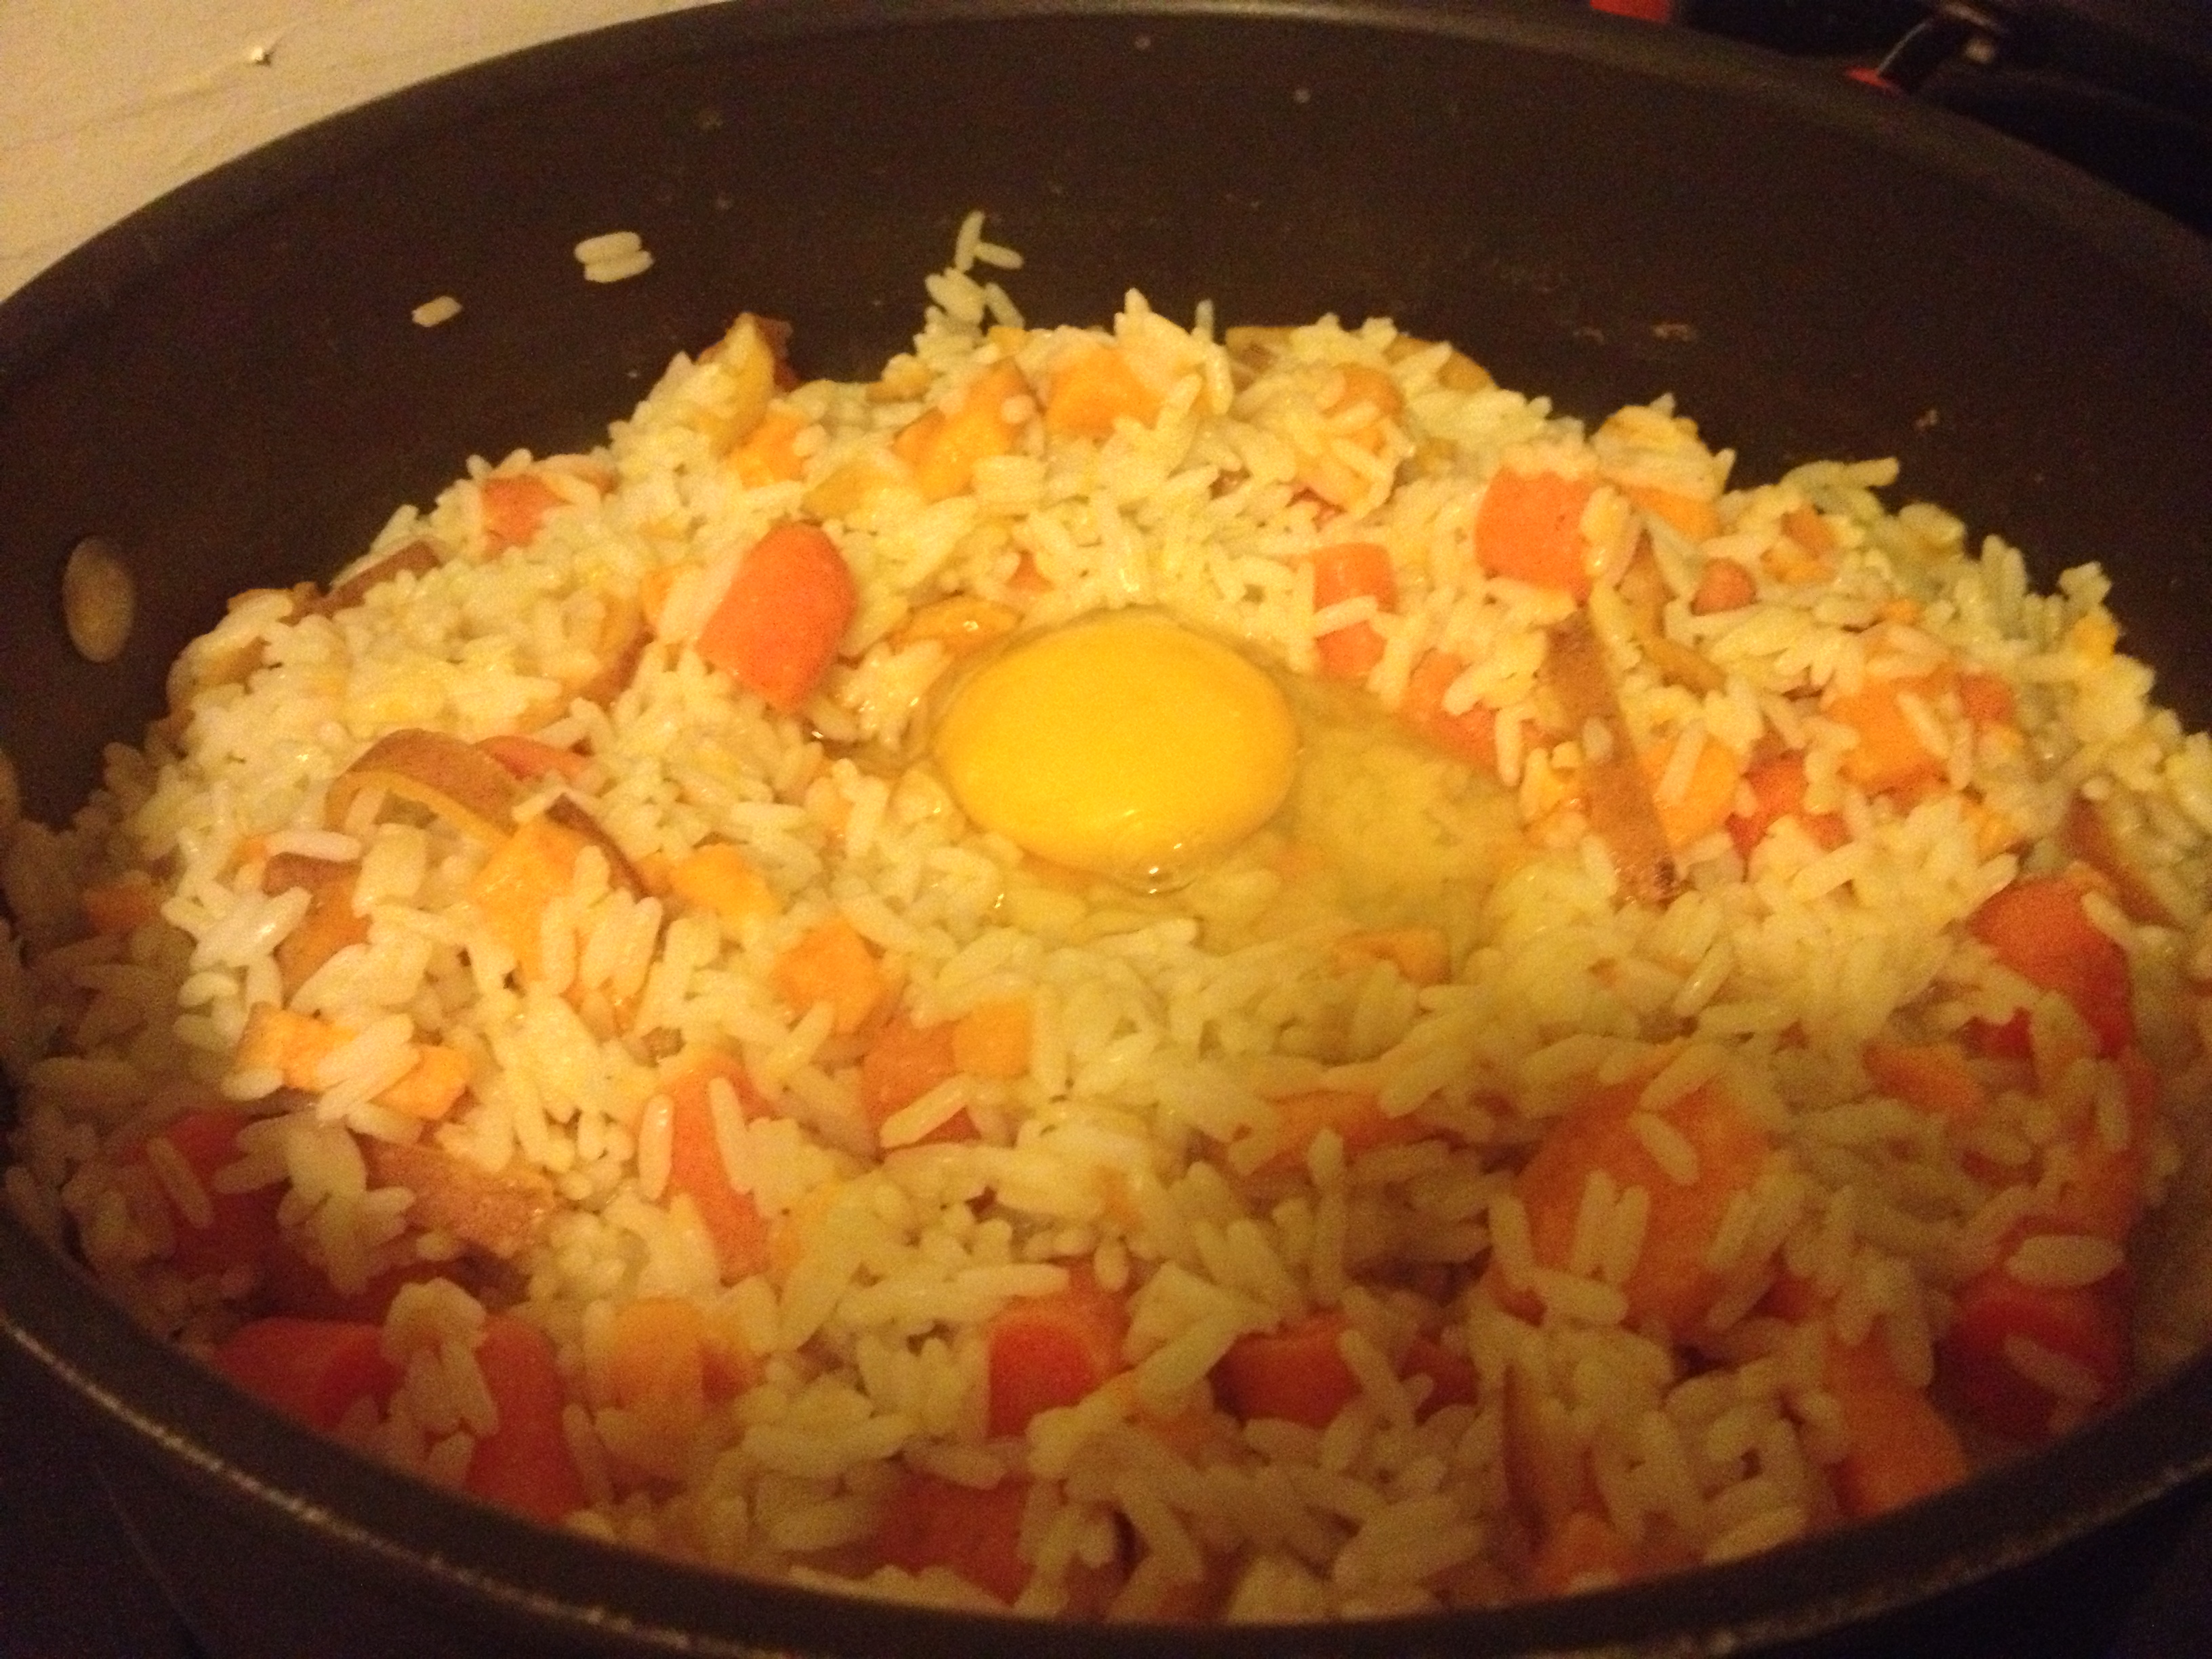 Homemade add on dog food. Rice, yams, carrots, egg.